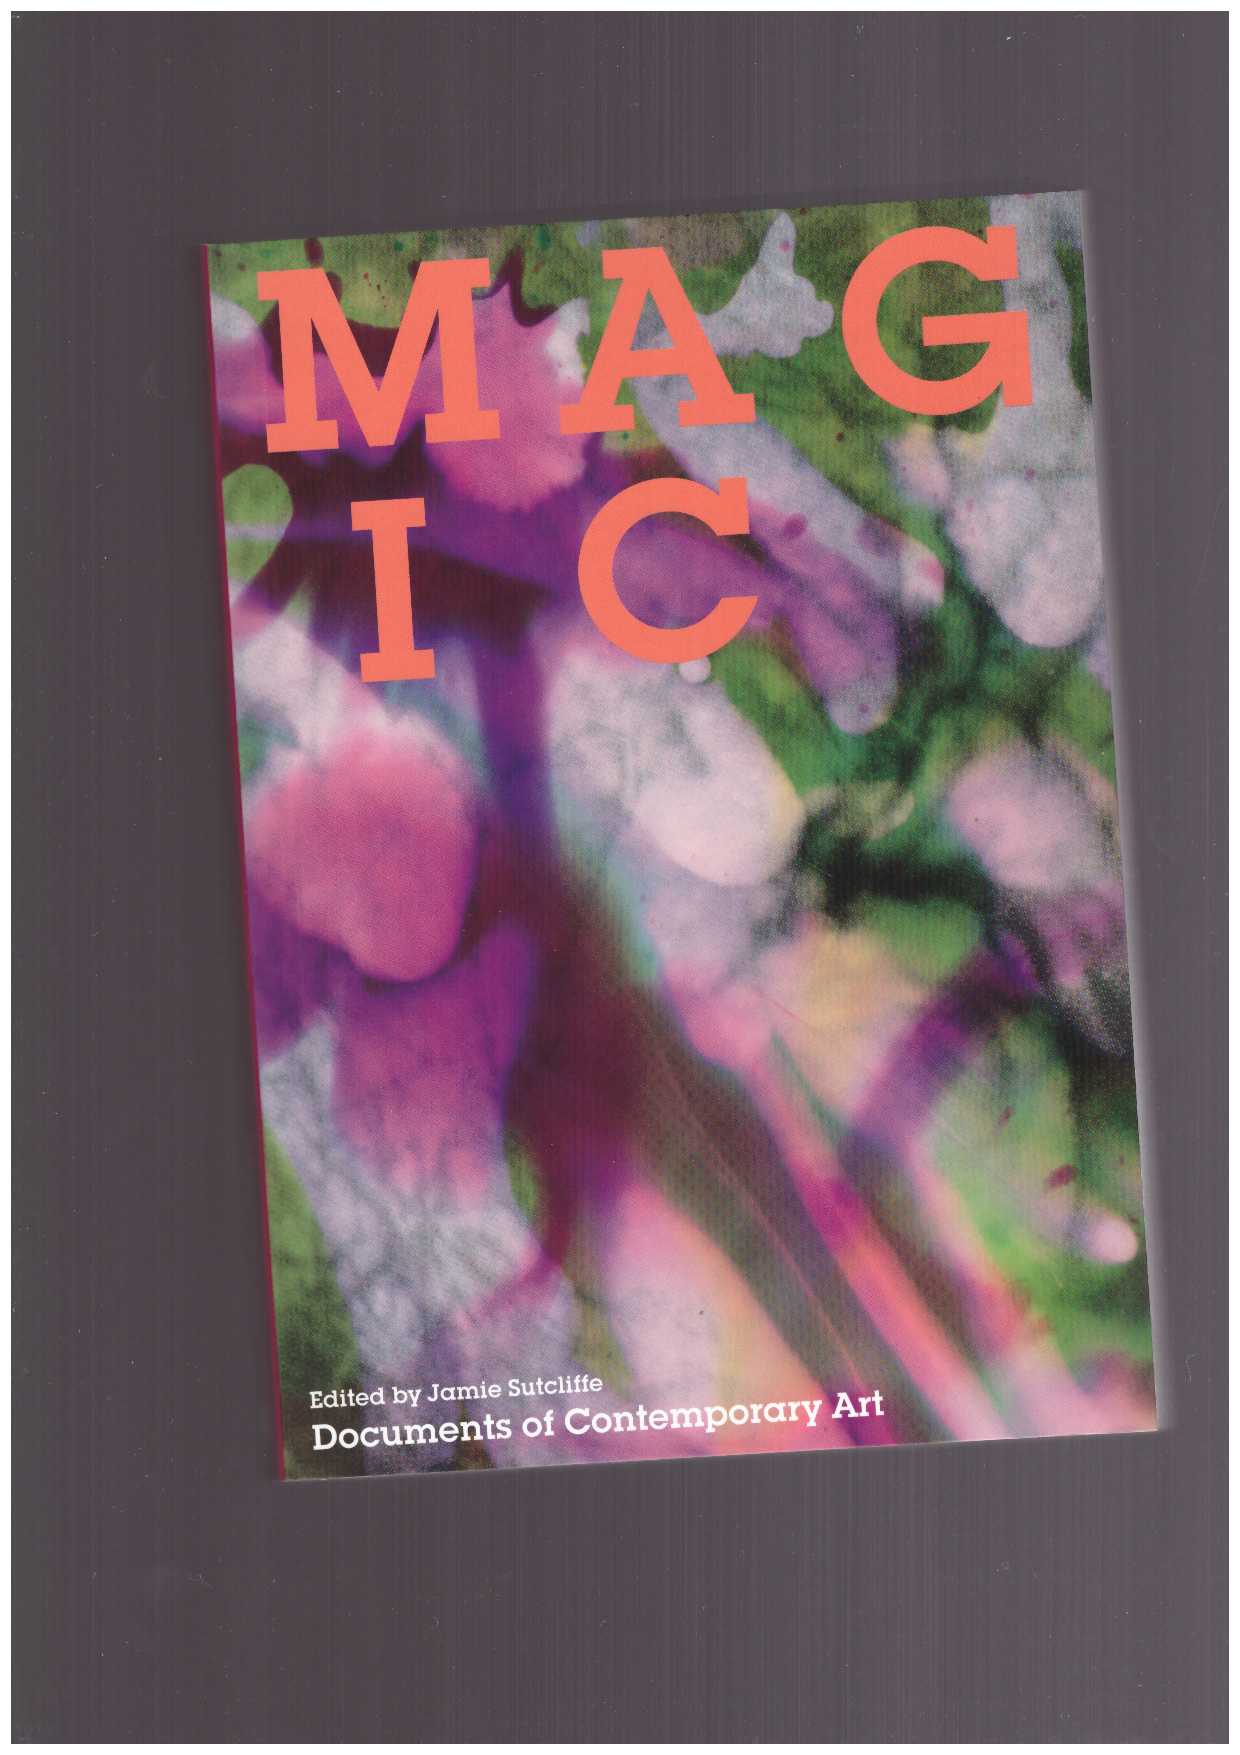 SUTCLIFFE, James - Documents of Contemporary Art: Magic